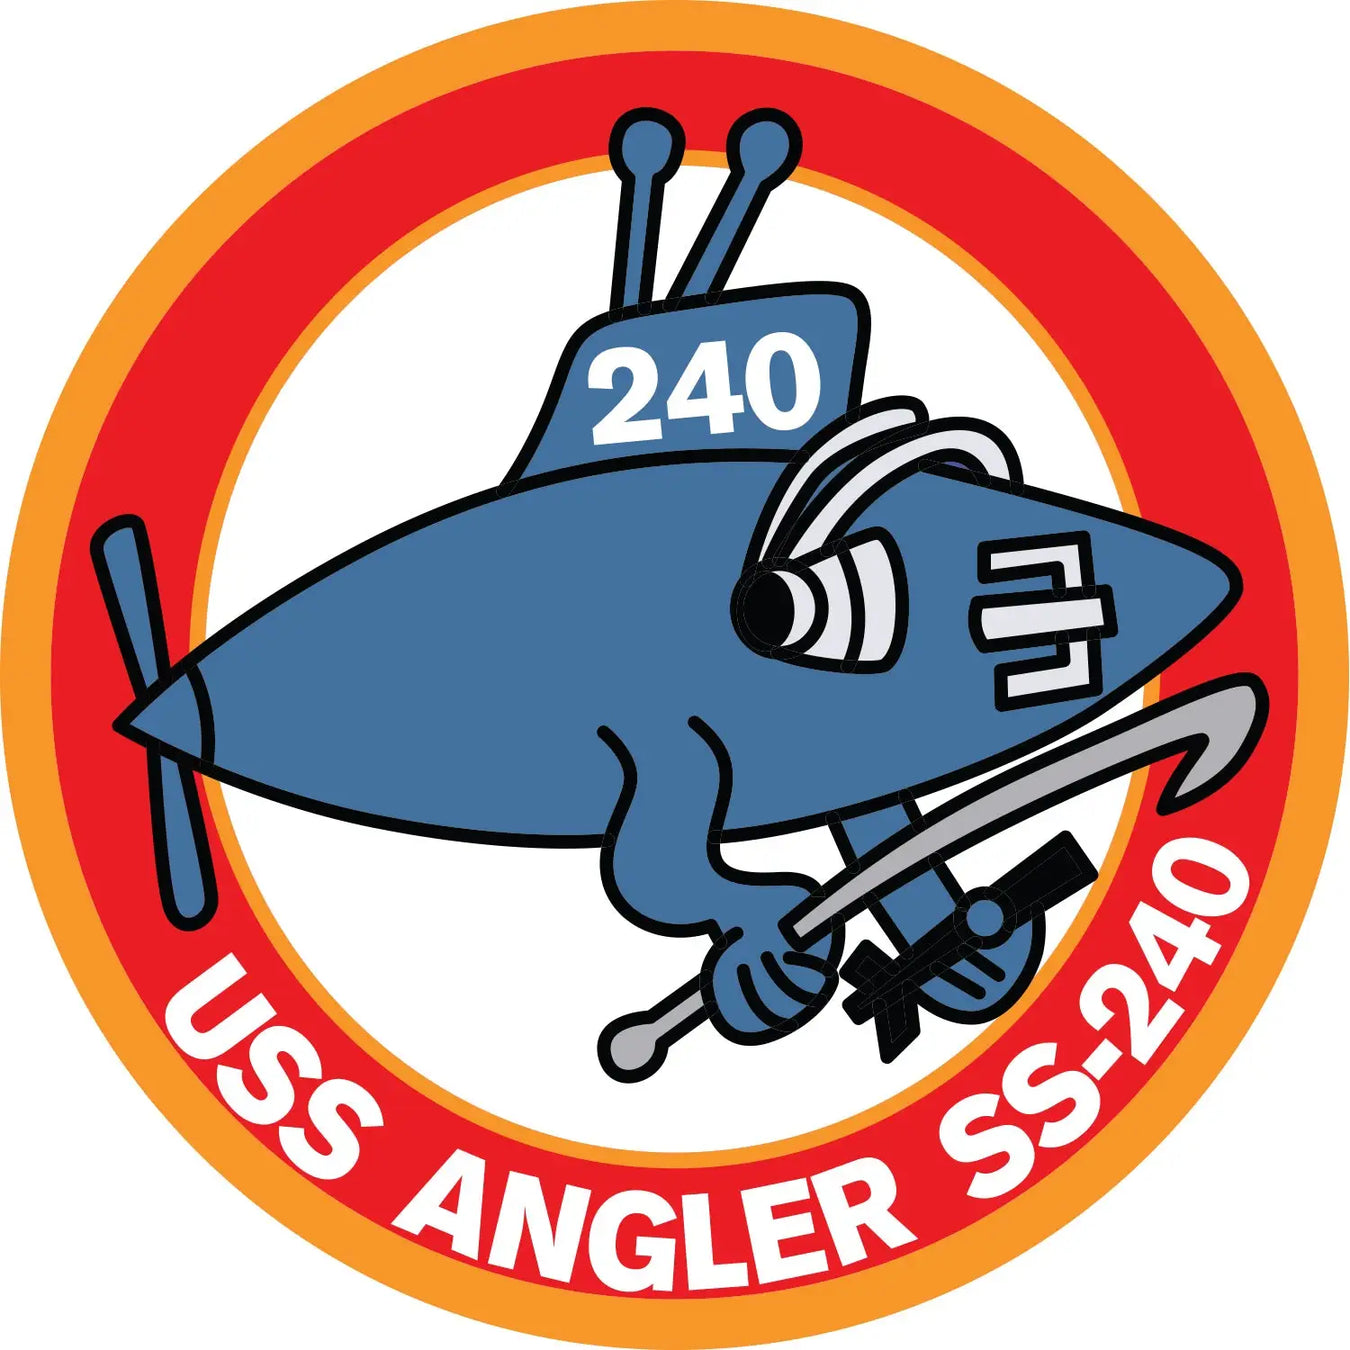 USS Angler (SS-240)